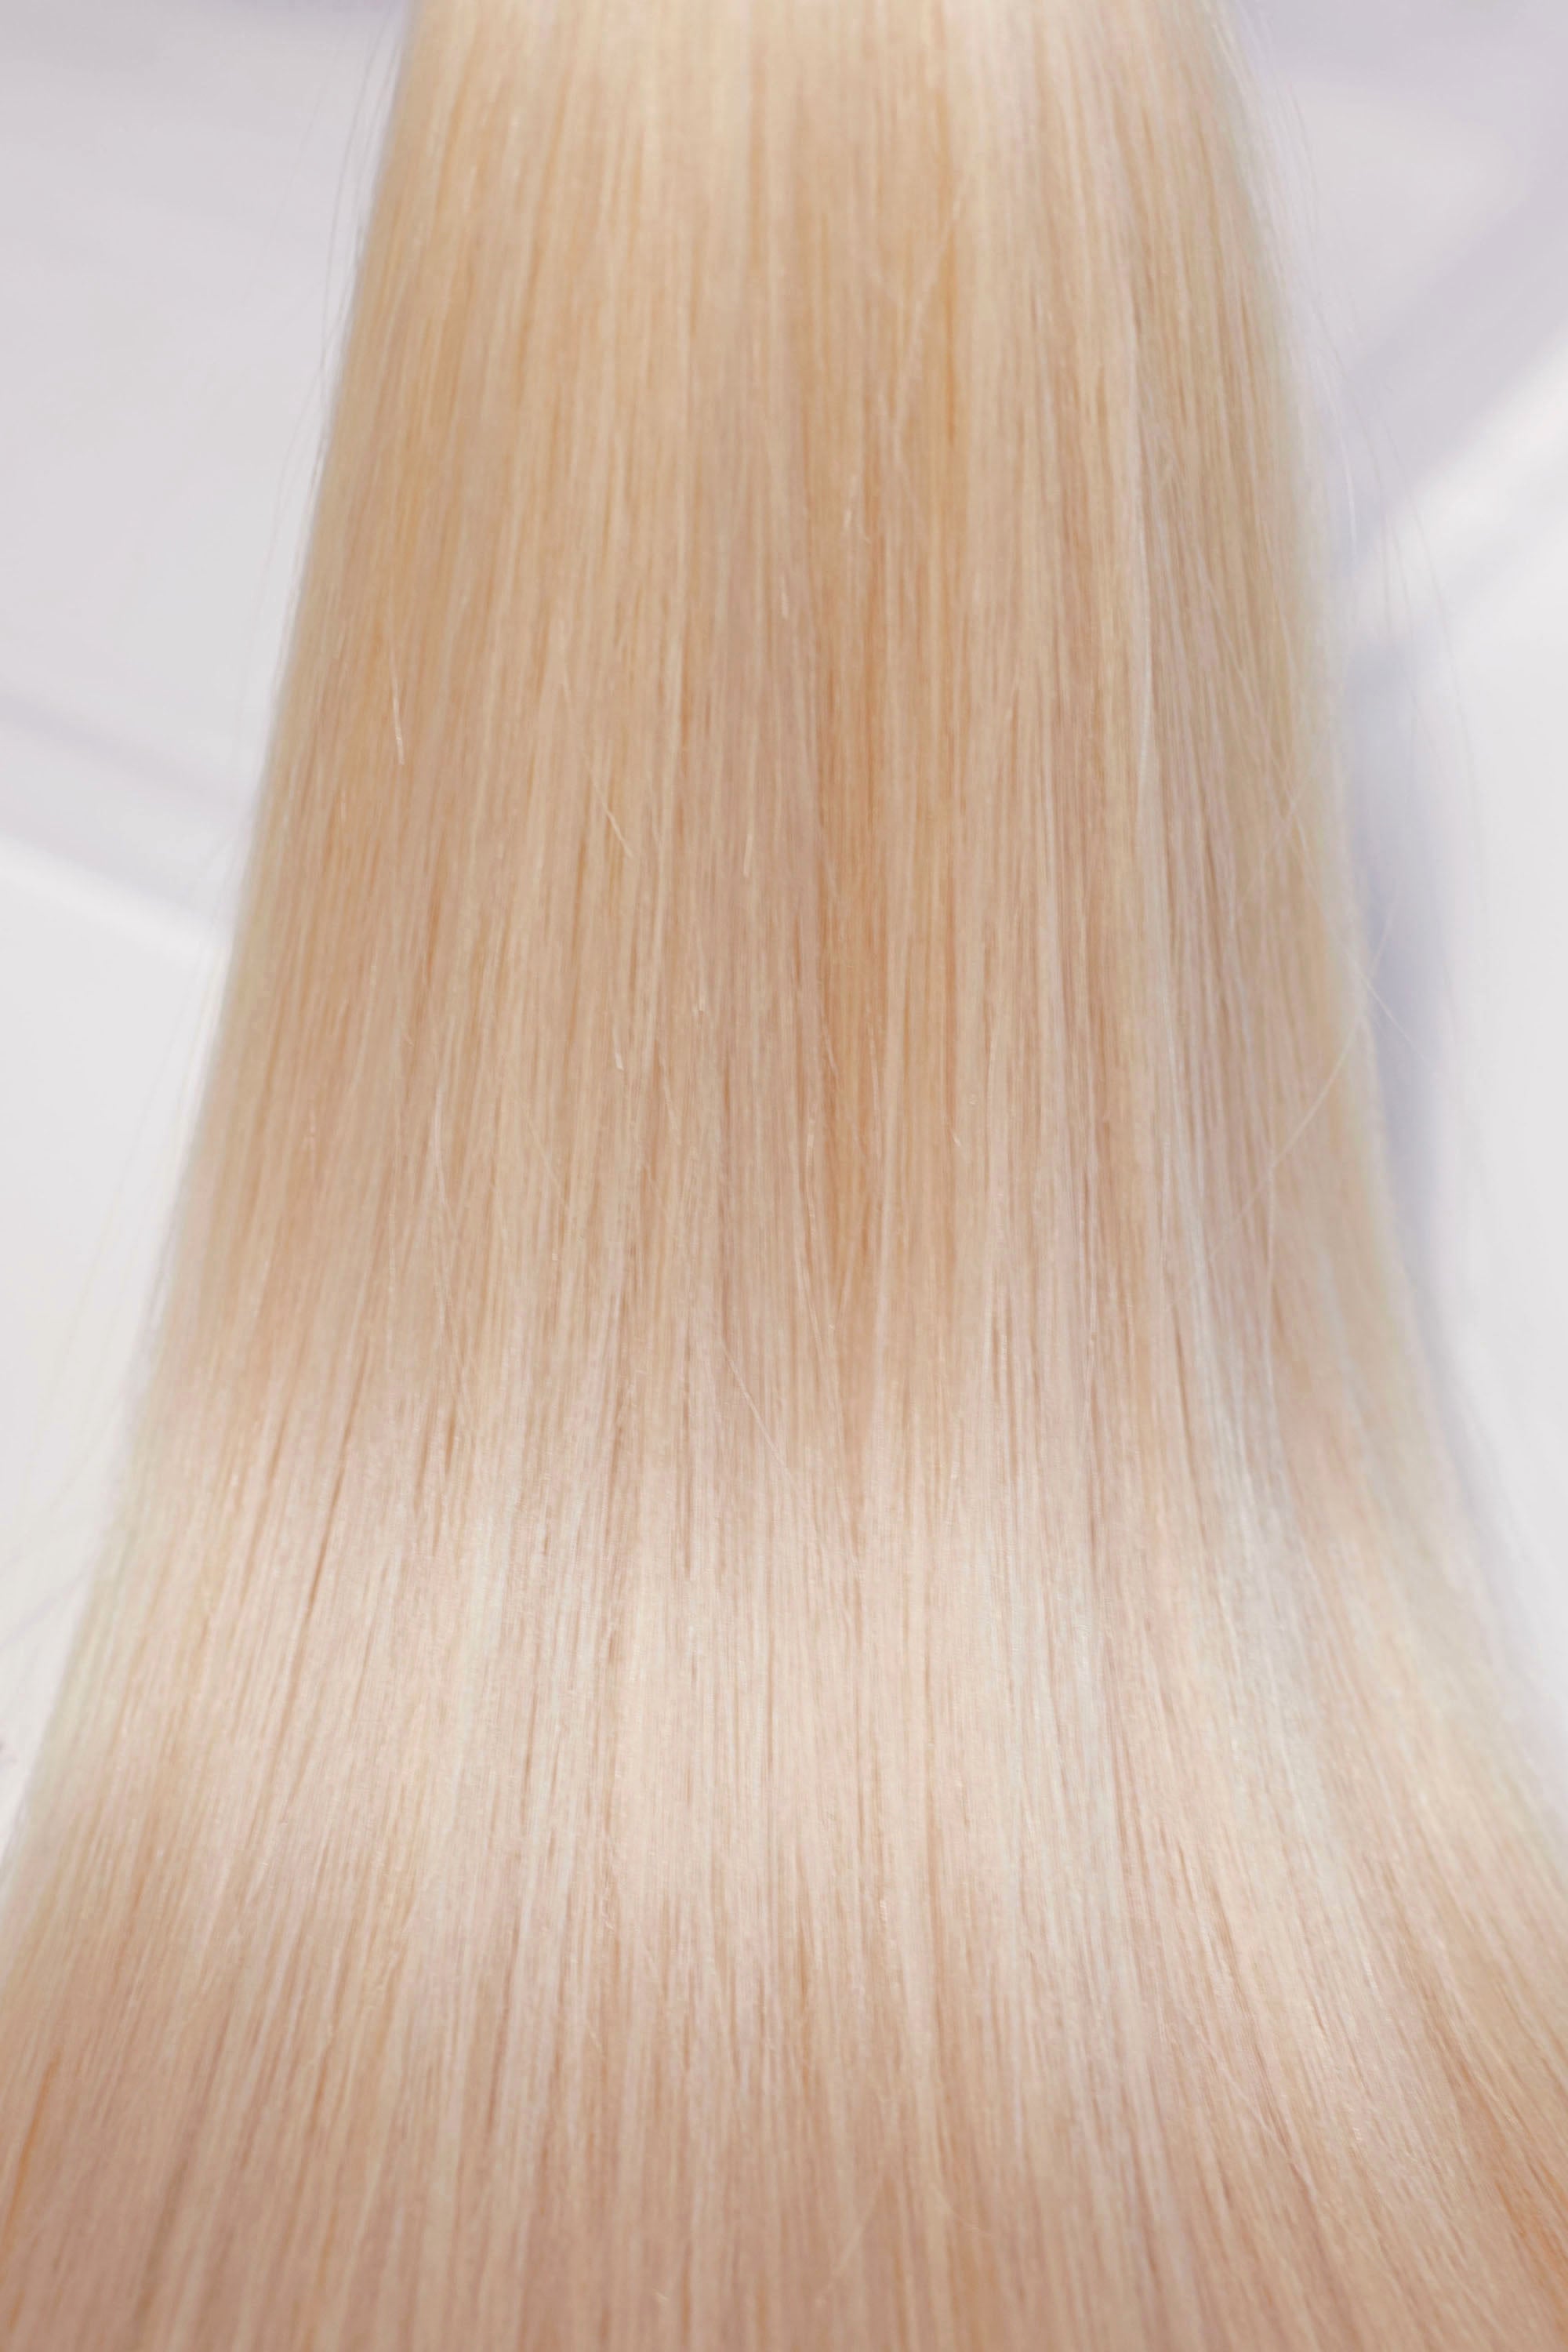 Behair professional Bulk hair "Premium" 18" (45cm) Natural Straight Platinum Blond #60 - 25g hair extensions